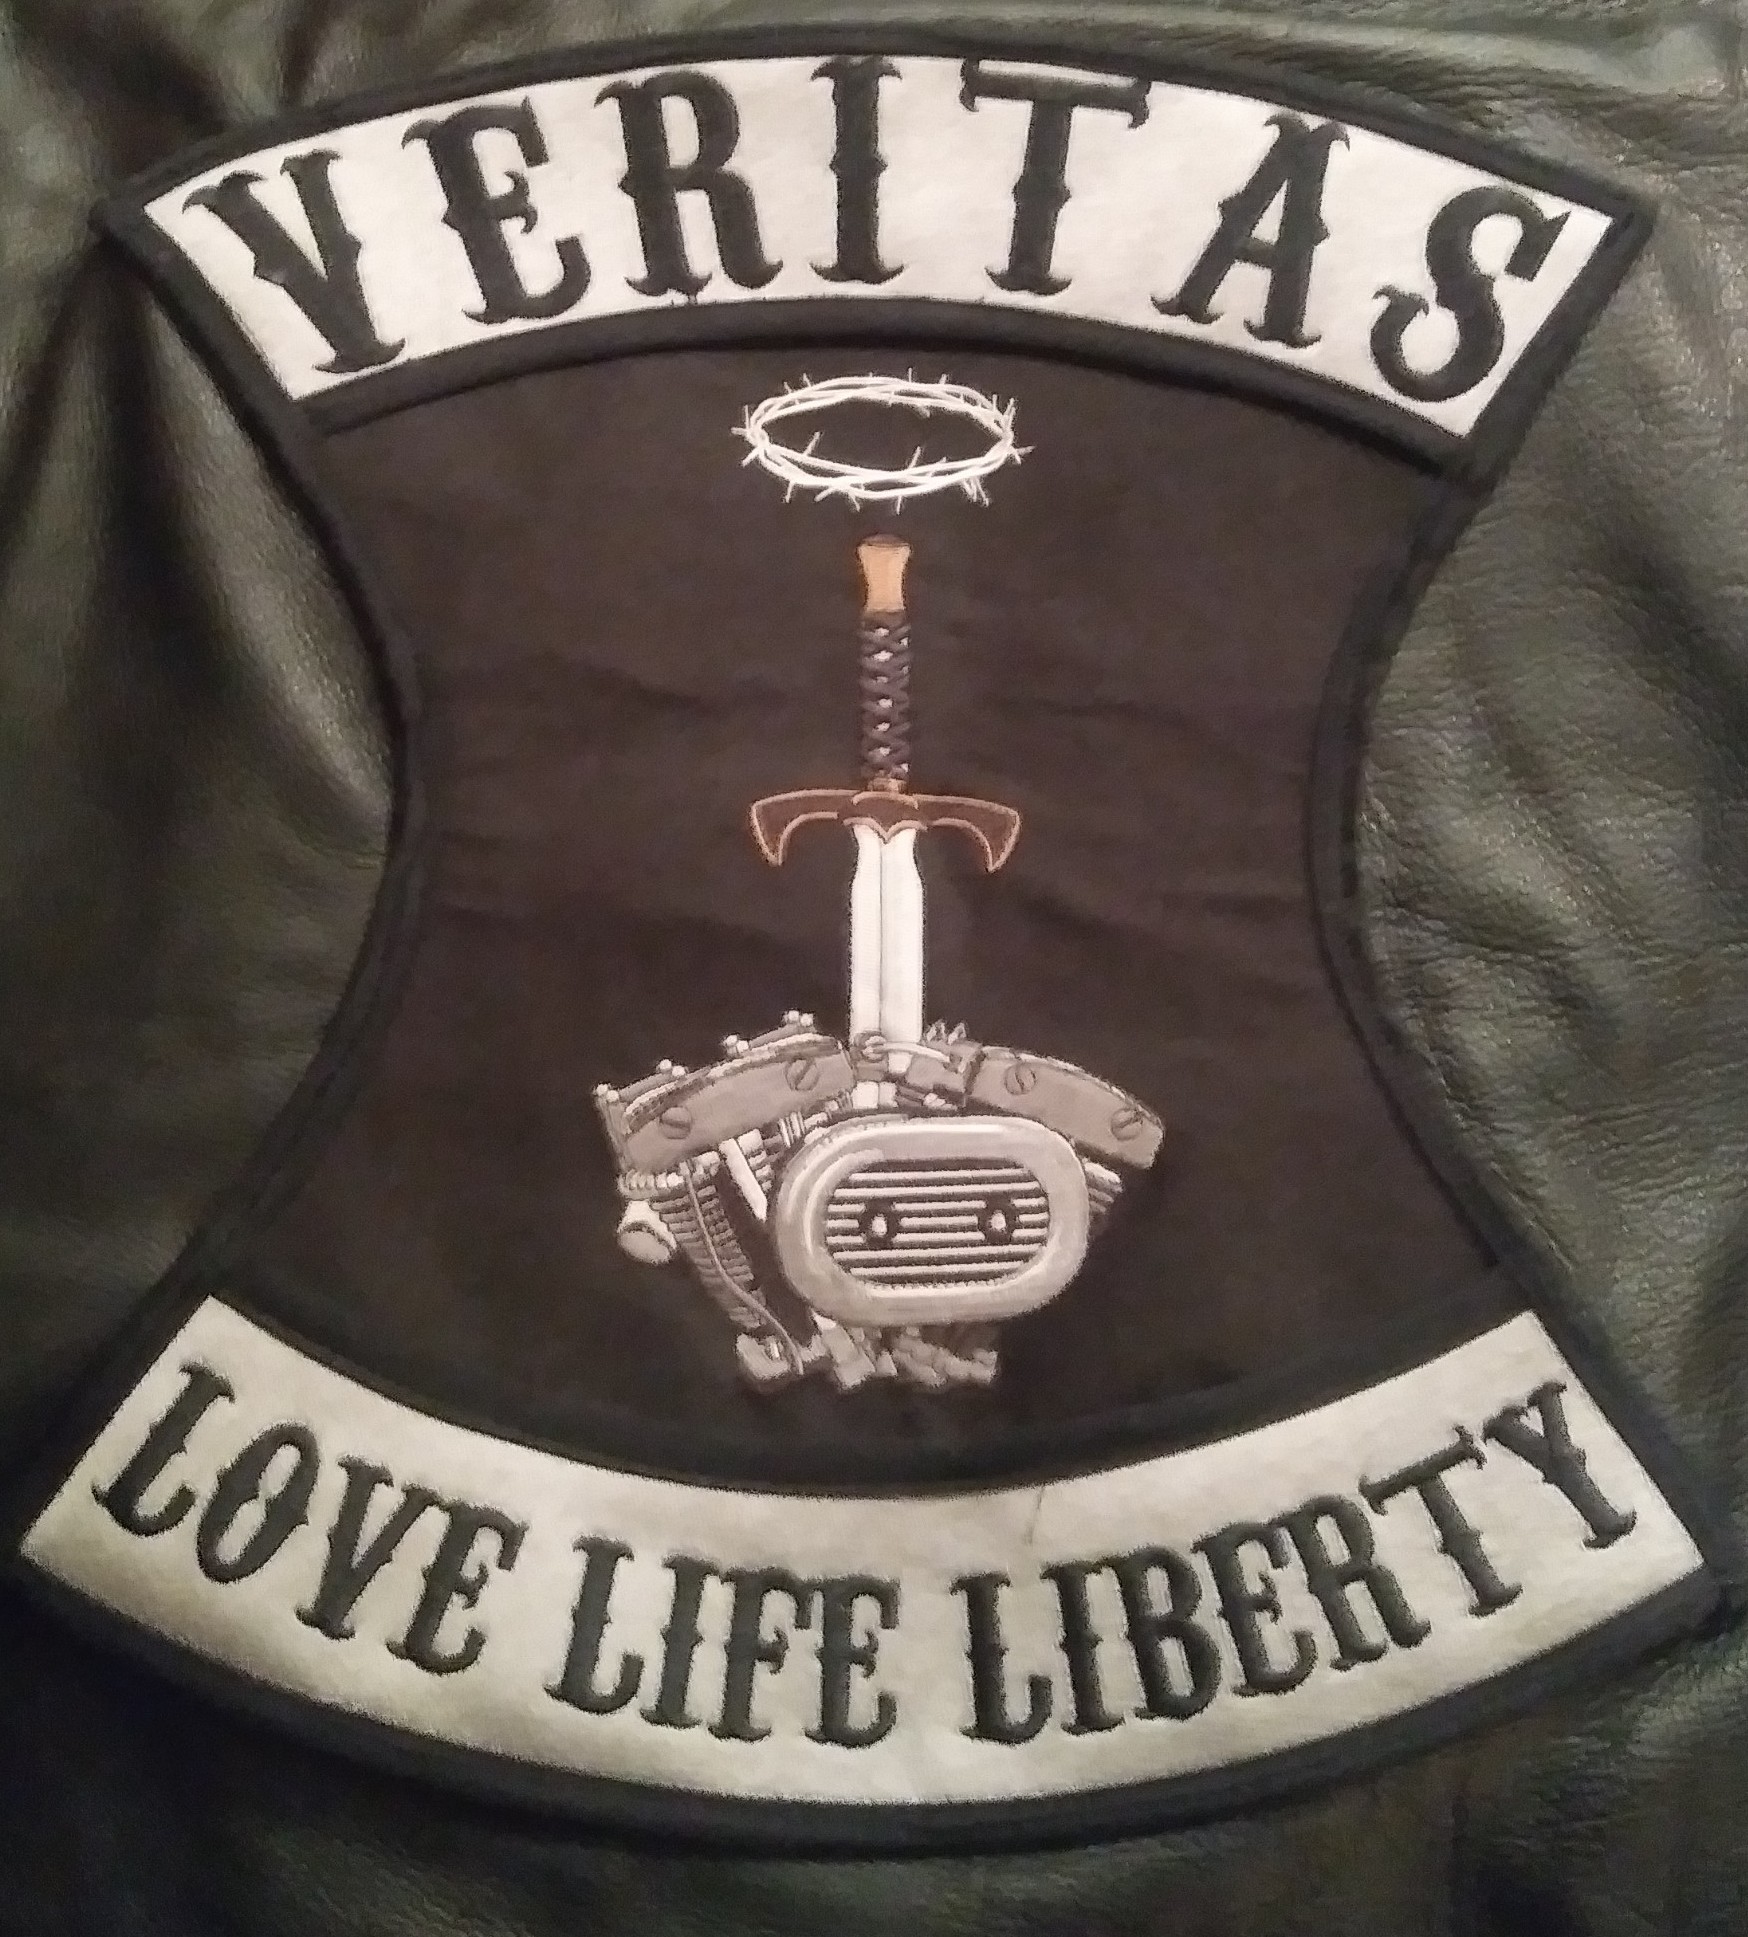 Veritas - Latin for Truth